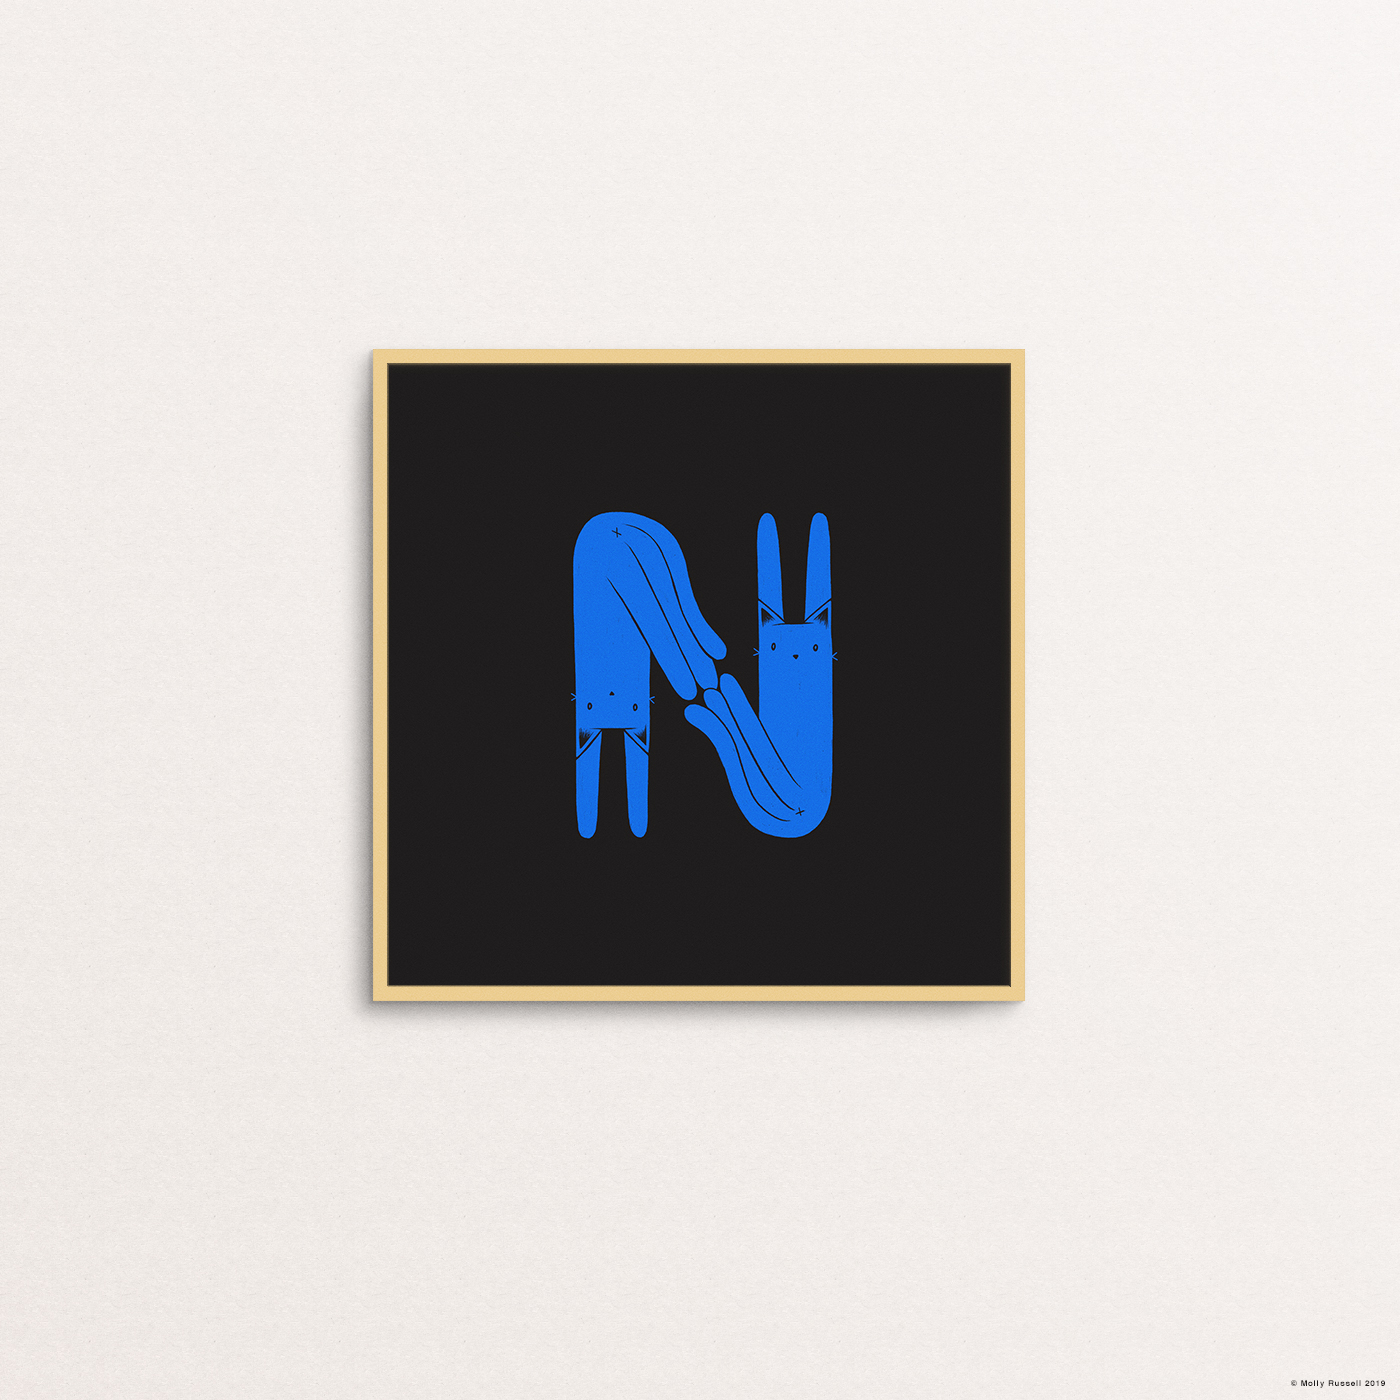 N is for Niko.